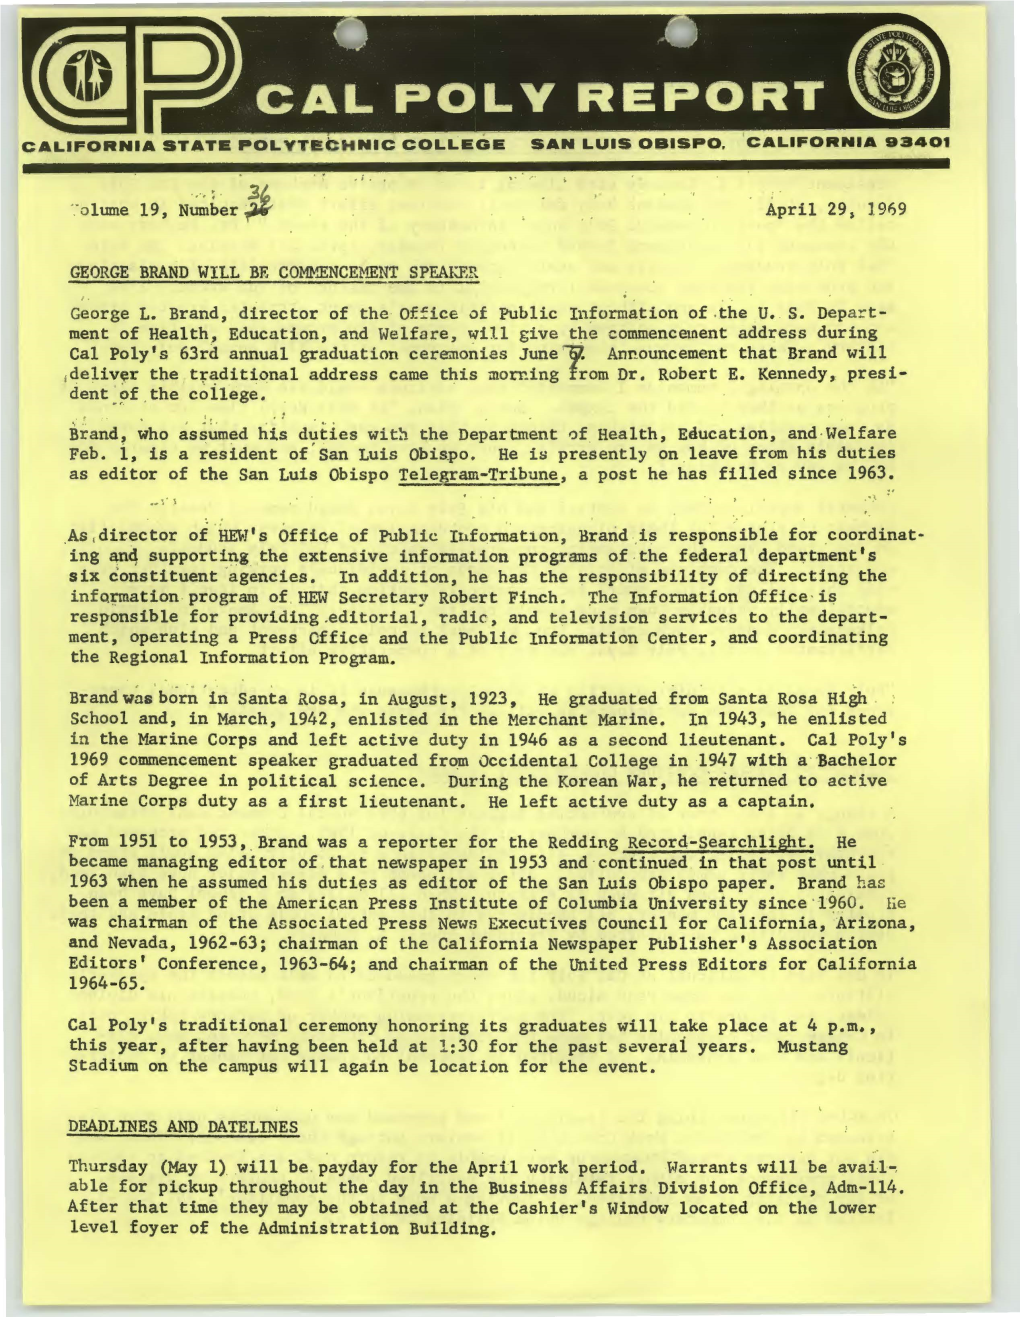 April 29, 1969 Cal Poly Report